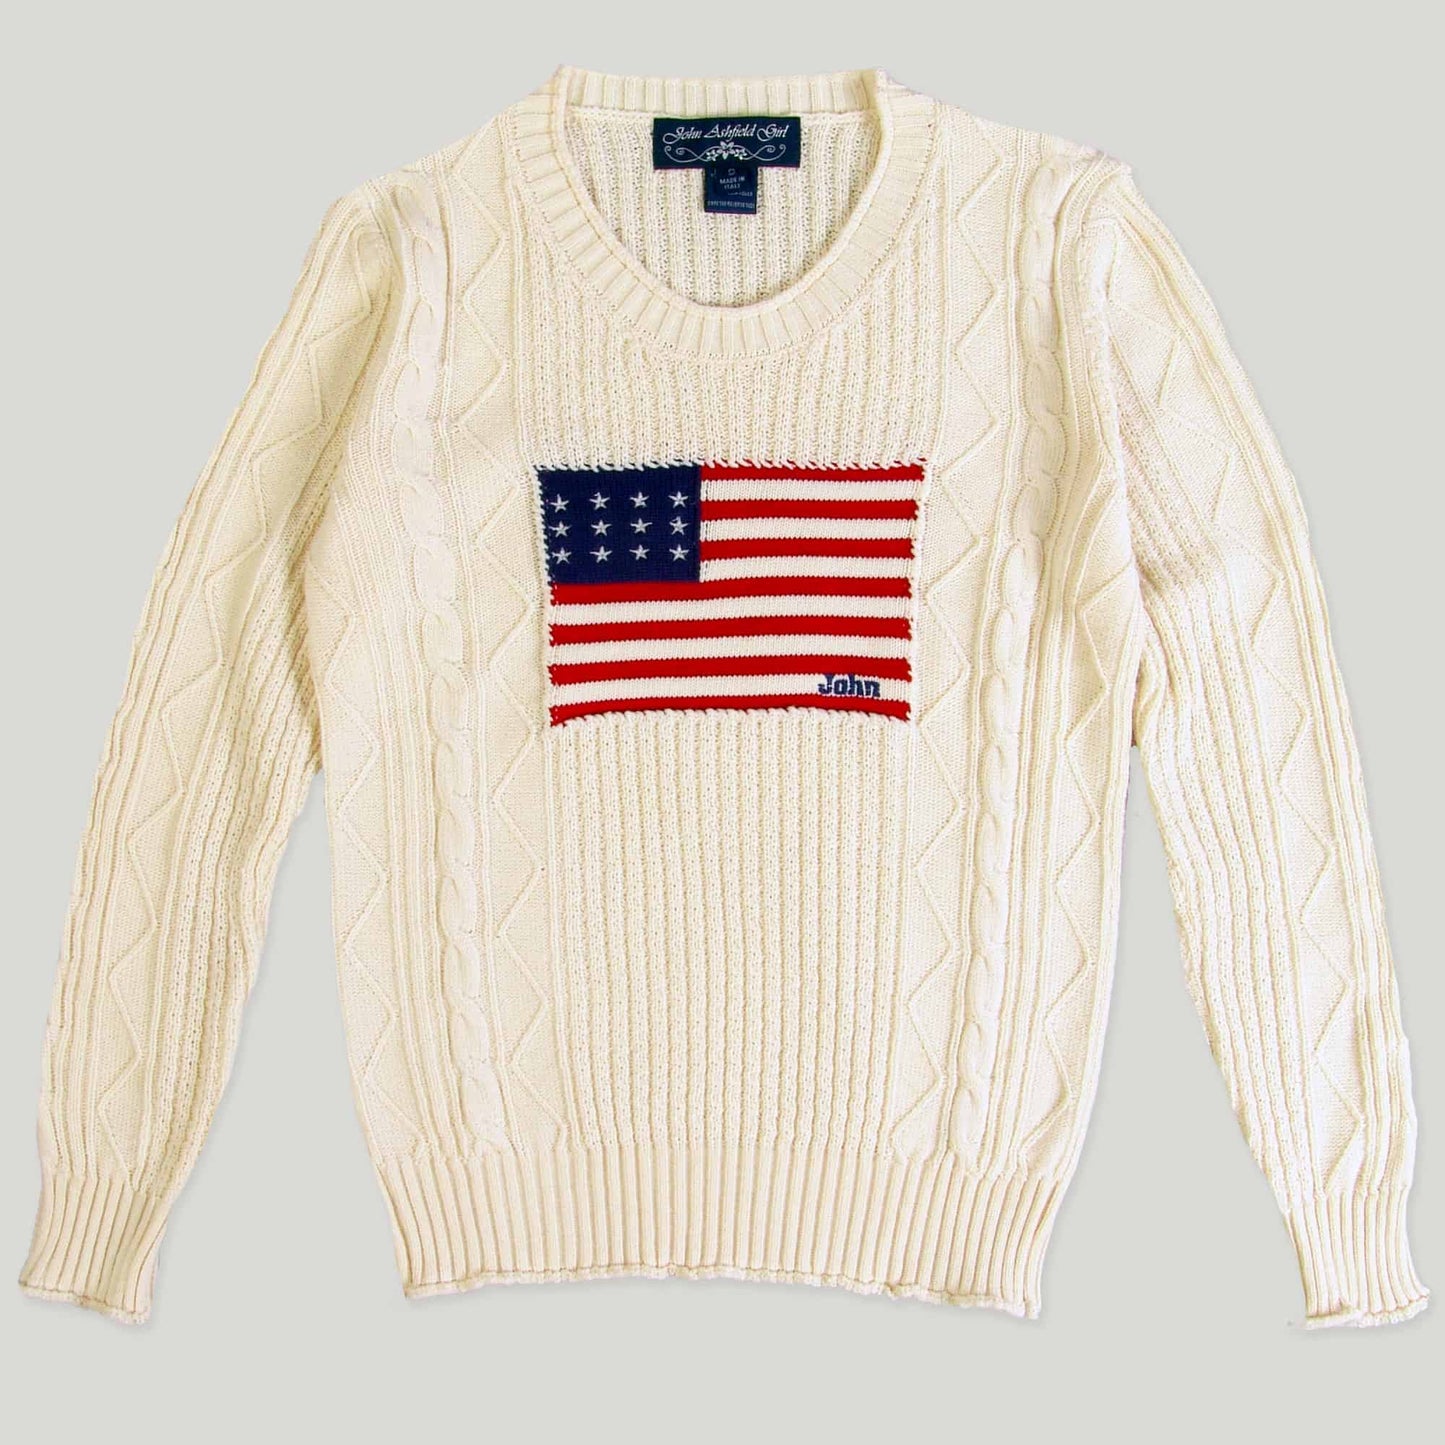 USA flag sweater